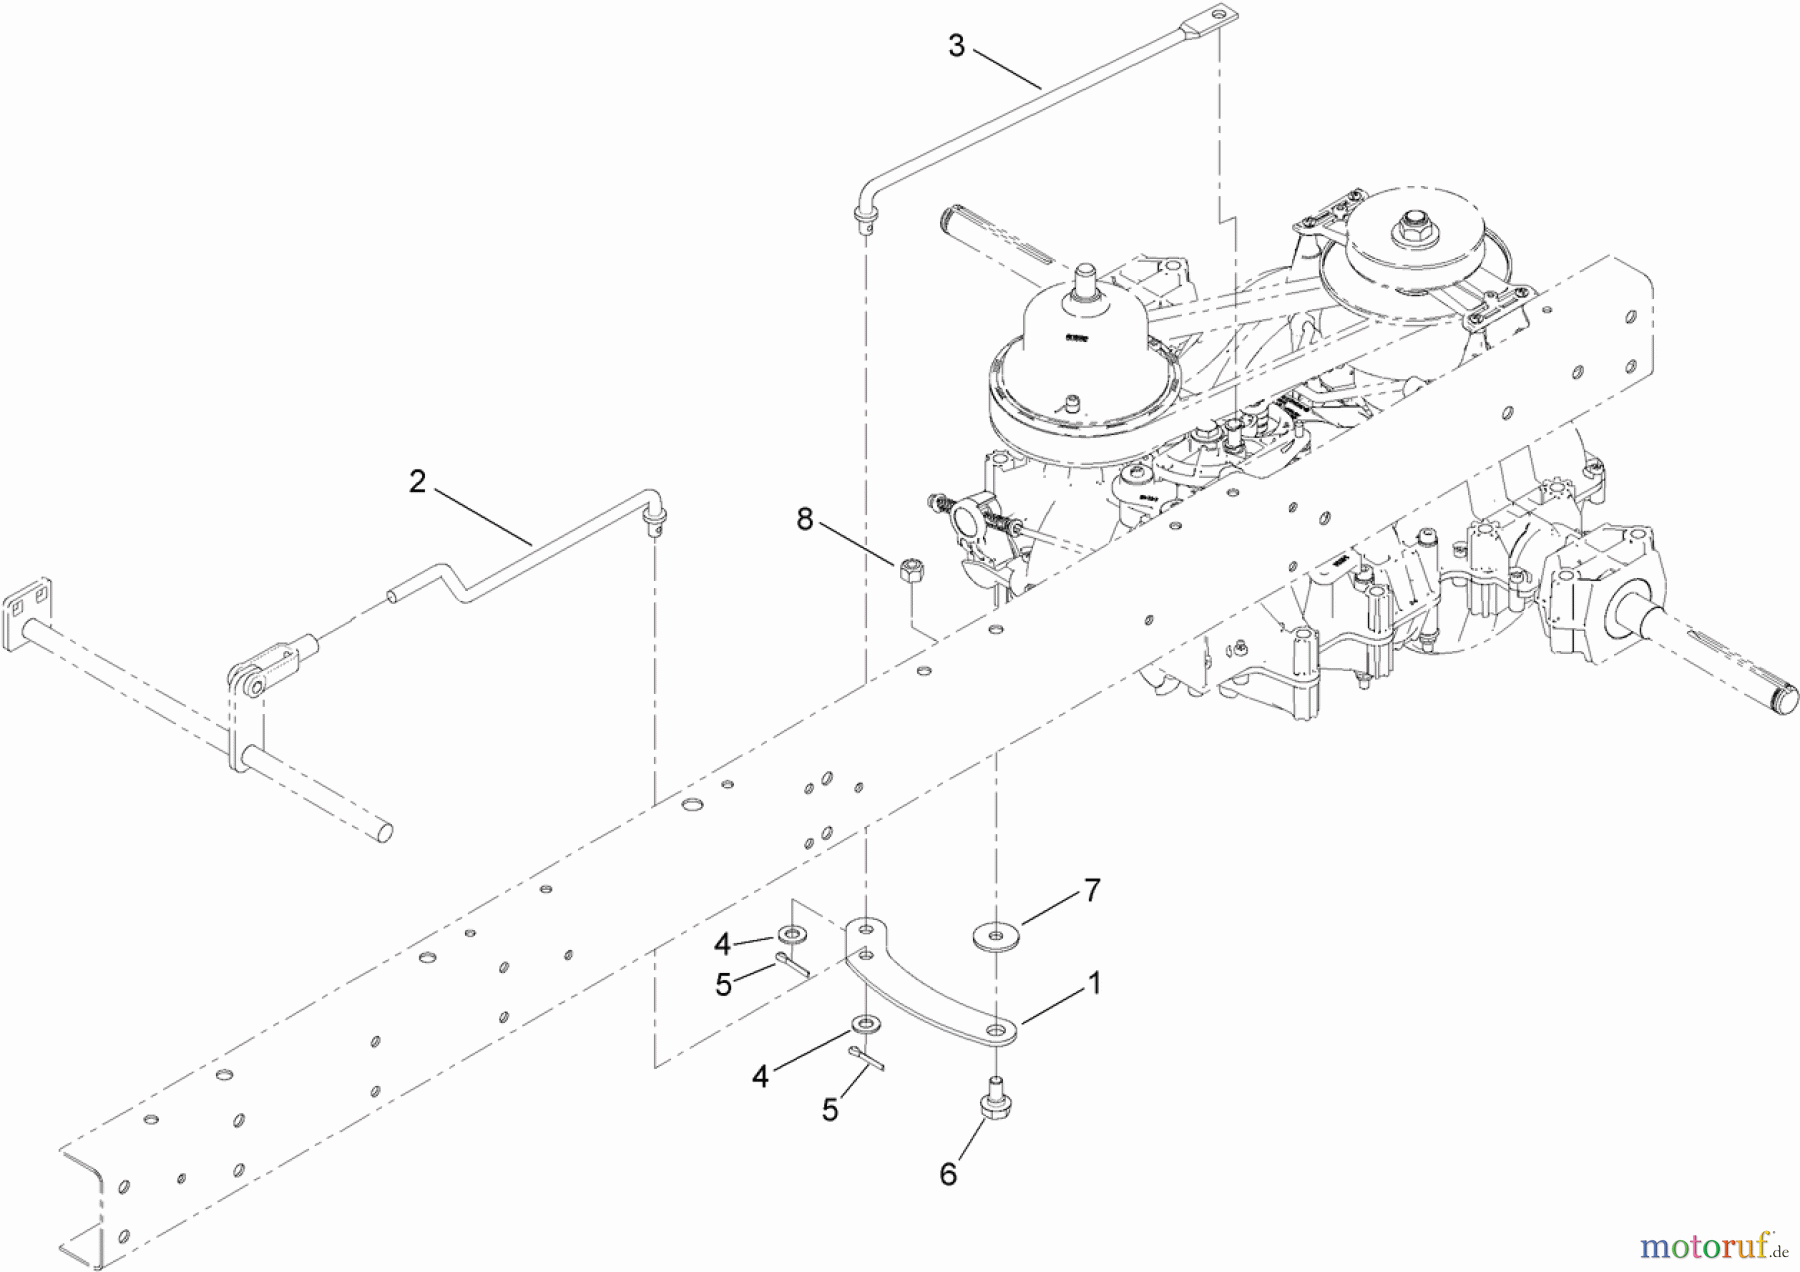  Toro Neu Accessories, Mower 121-4040 - Toro Motion Control Link Kit, XLS Lawn Tractor MOTION CONTROL LINK KIT ASSEMBLY NO. 121-4040